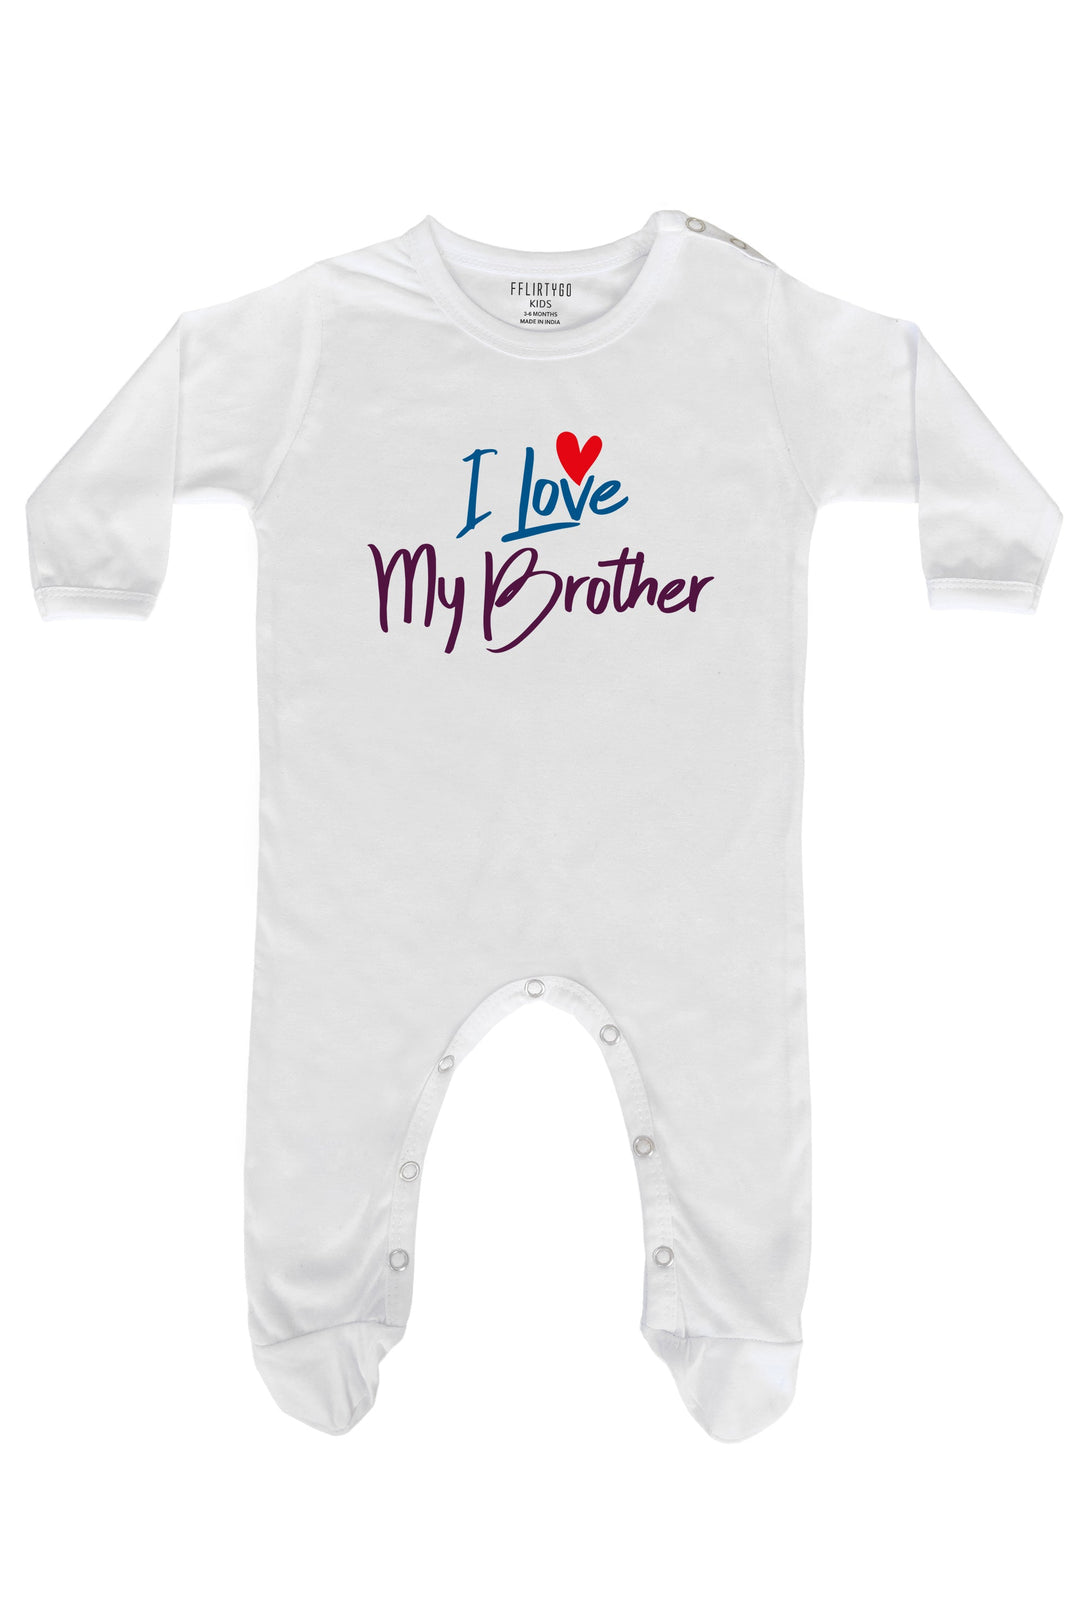 I Love My Brother Baby Romper | Onesies